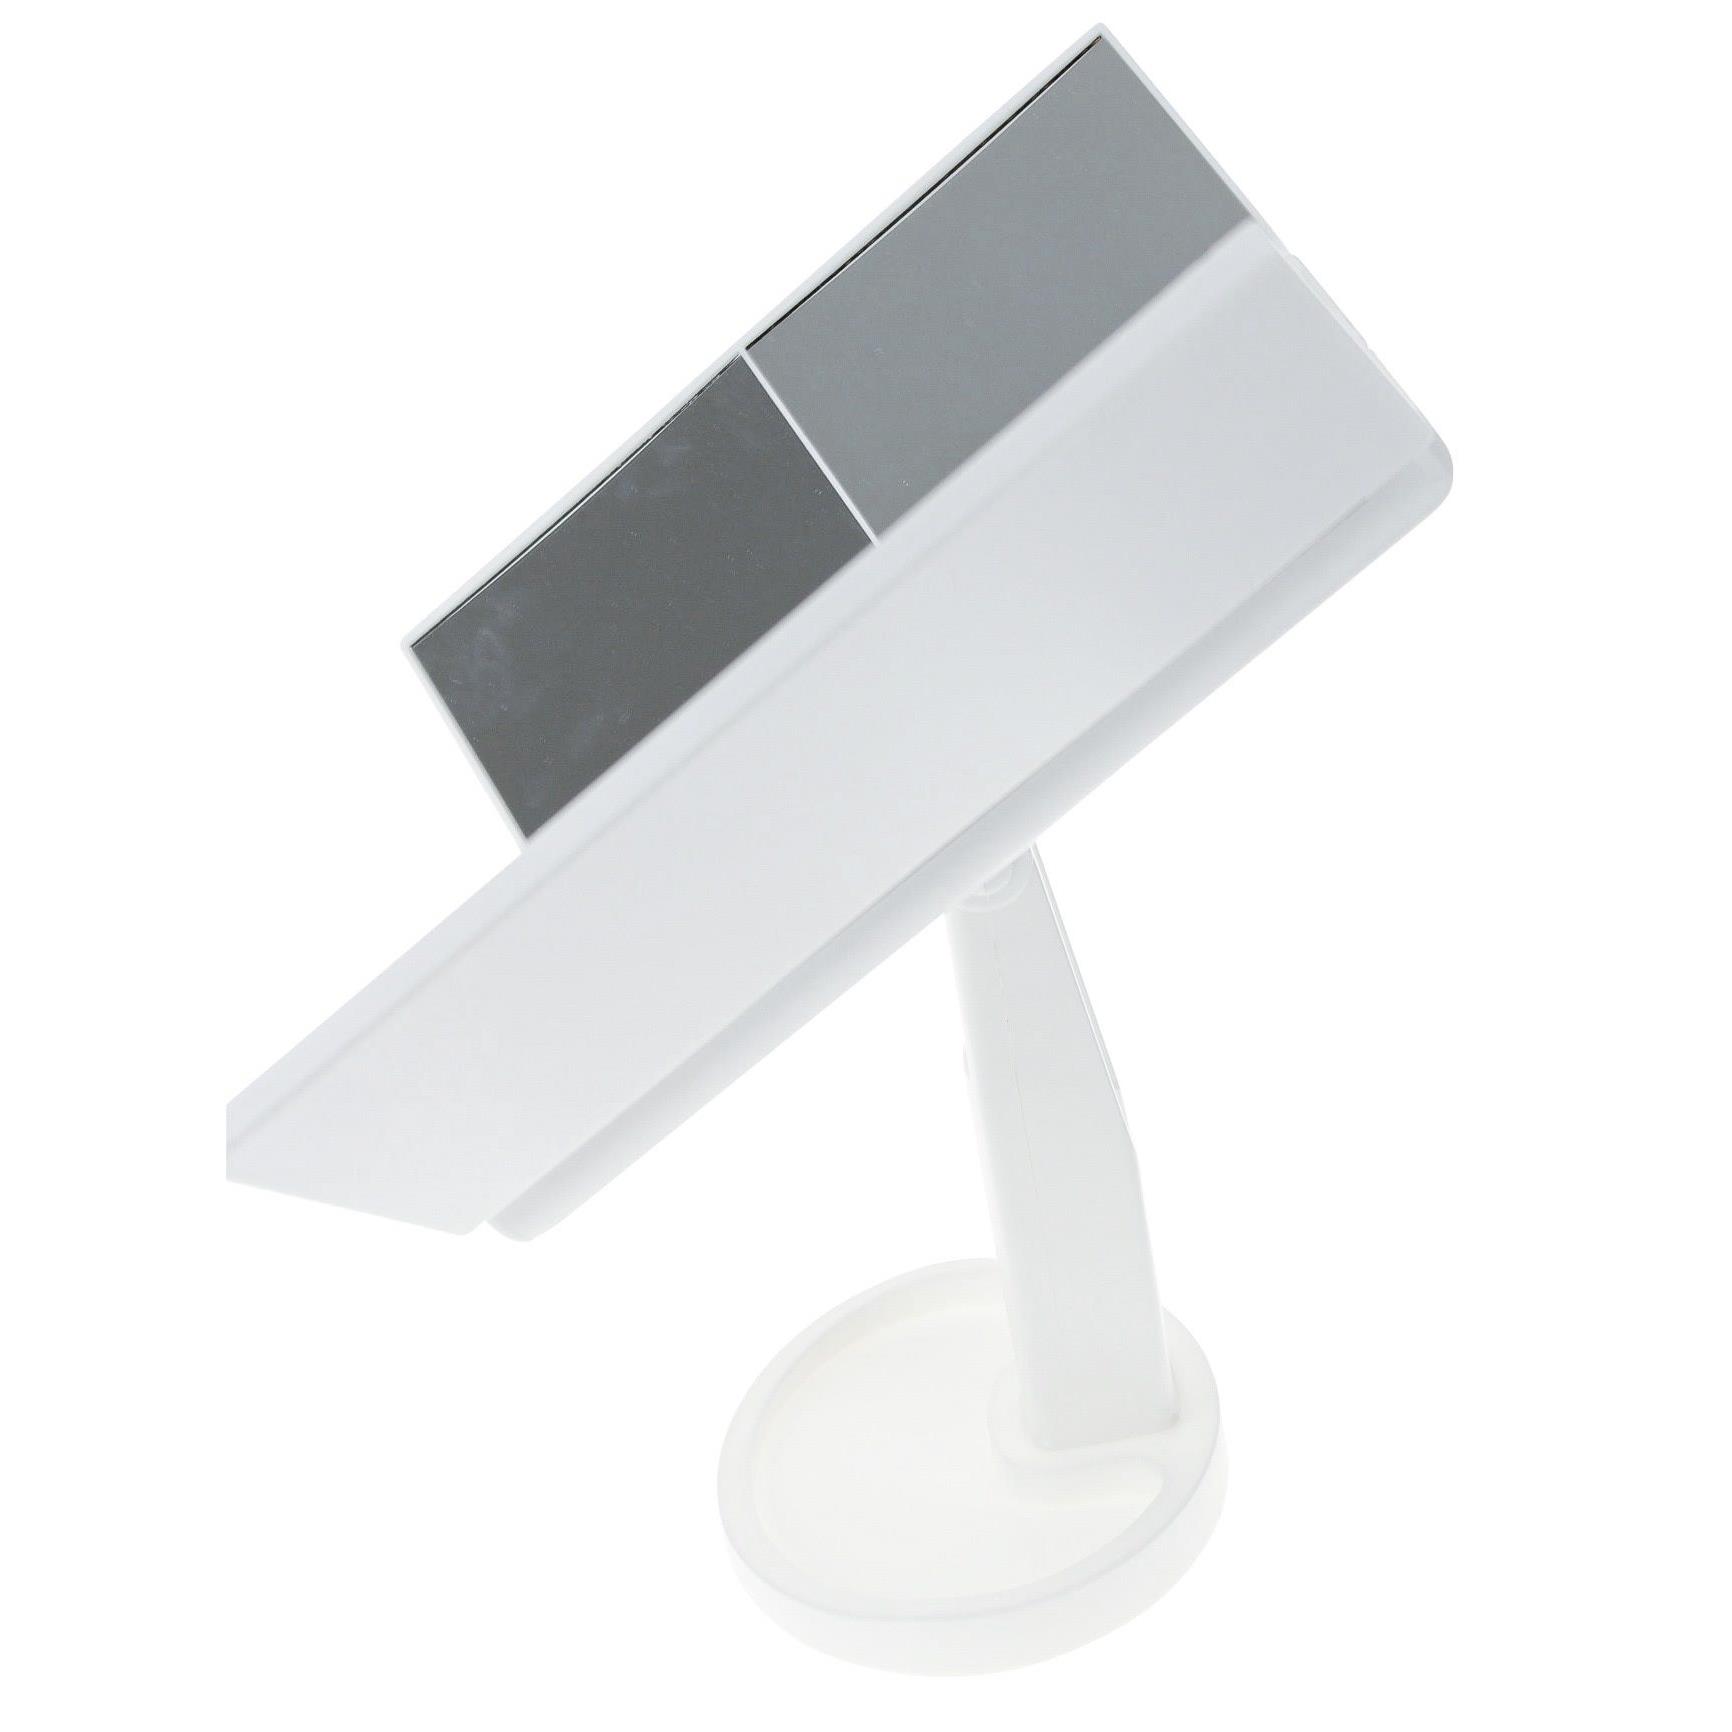 United Entertainment ® Touch Make-Up Spiegel met LED verlichting - Wit kopen?  Shop bij fonQ!